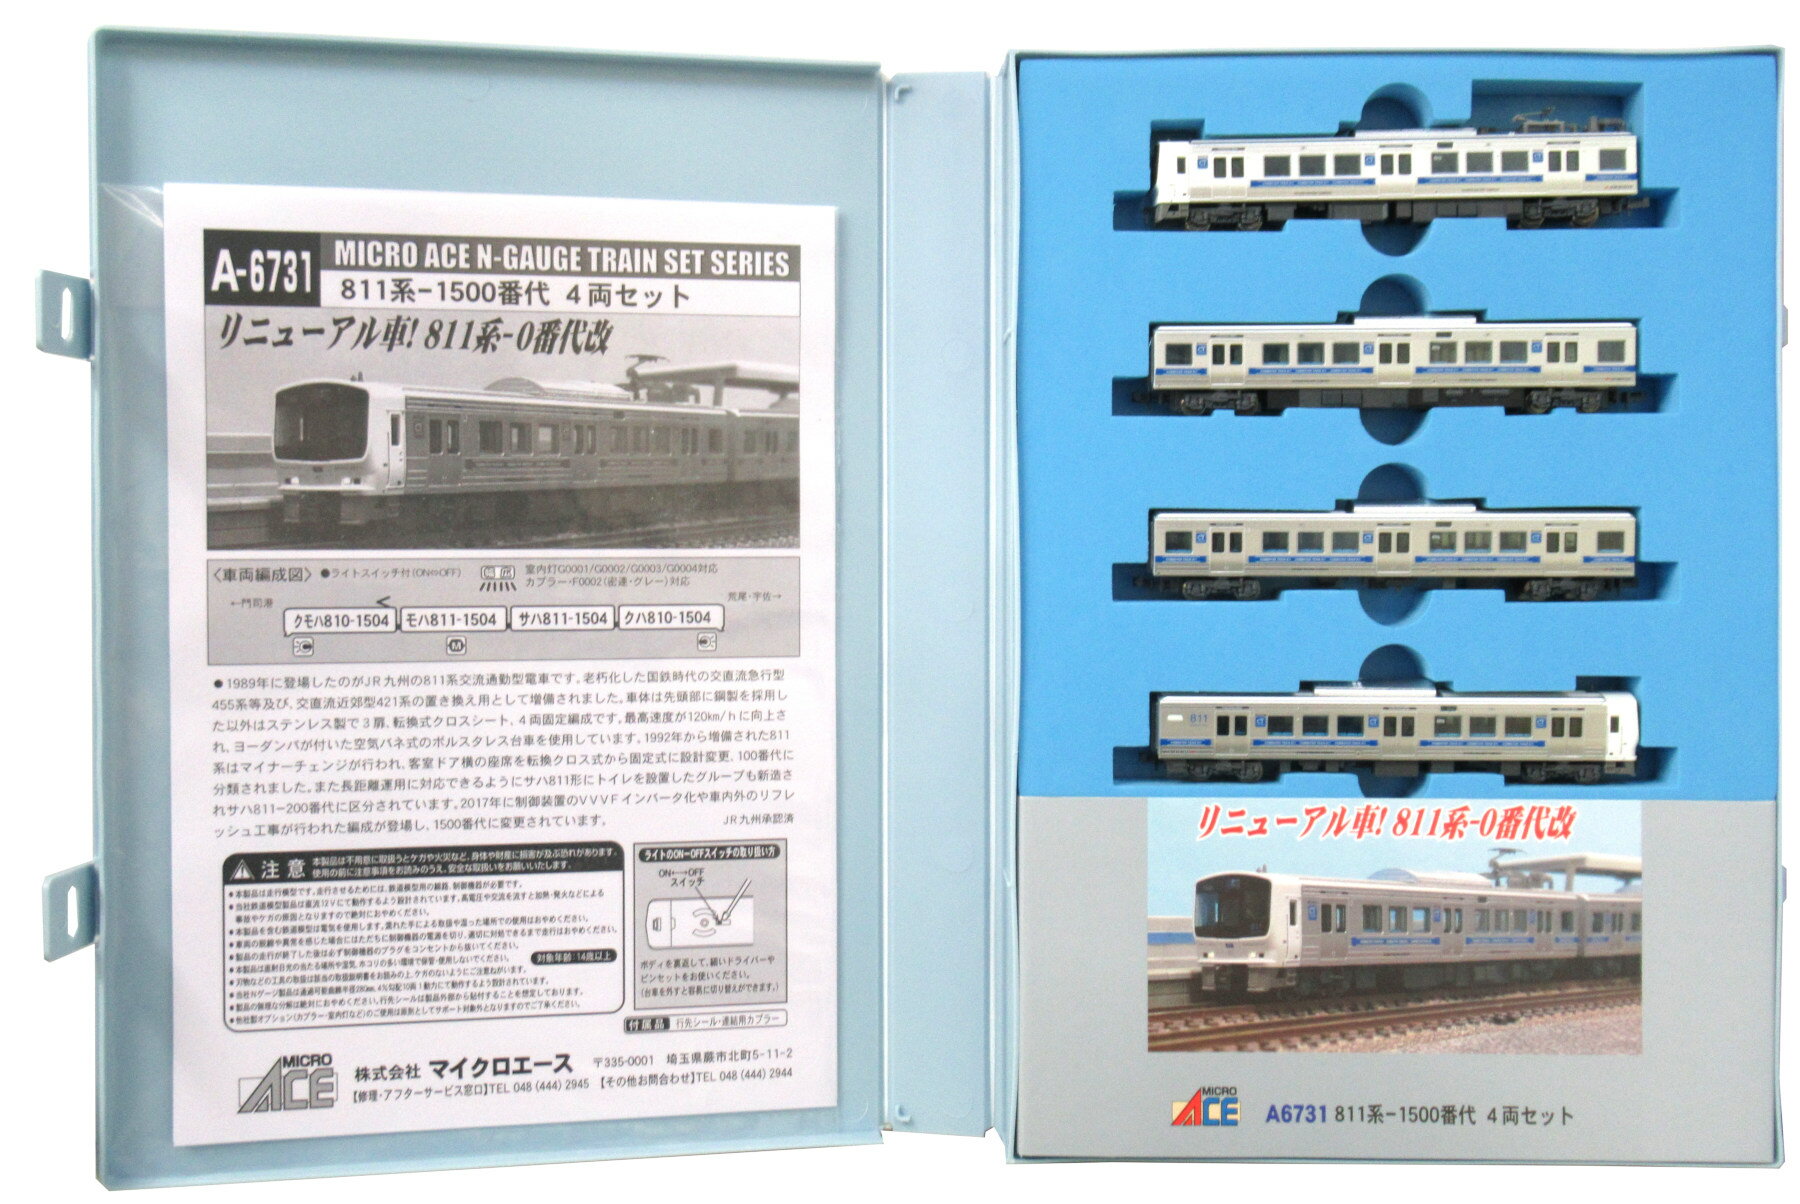 KATO Nゲージ クモニ83804 鉄道模型 4862-2 長岡運転所 電車 湘南色